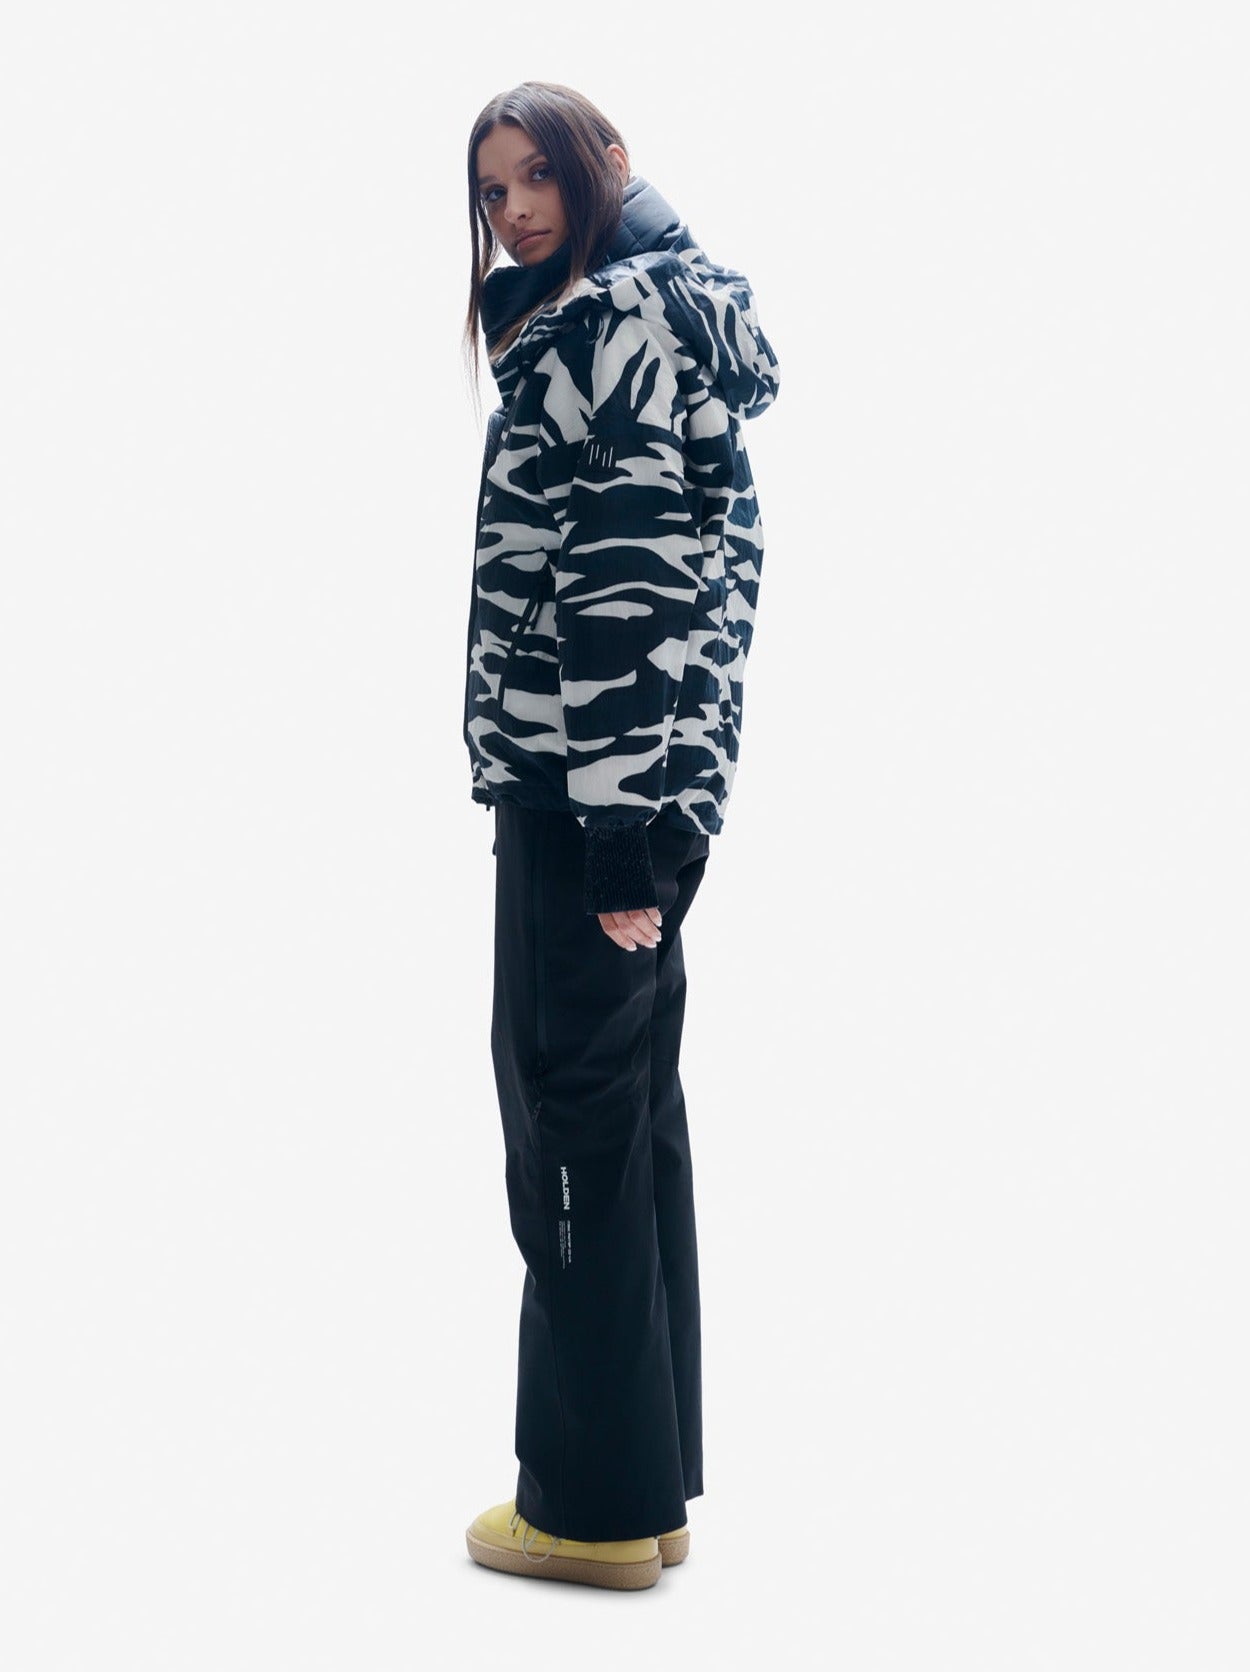 Women's Sloane Insulated Jacket - Zebra - left side